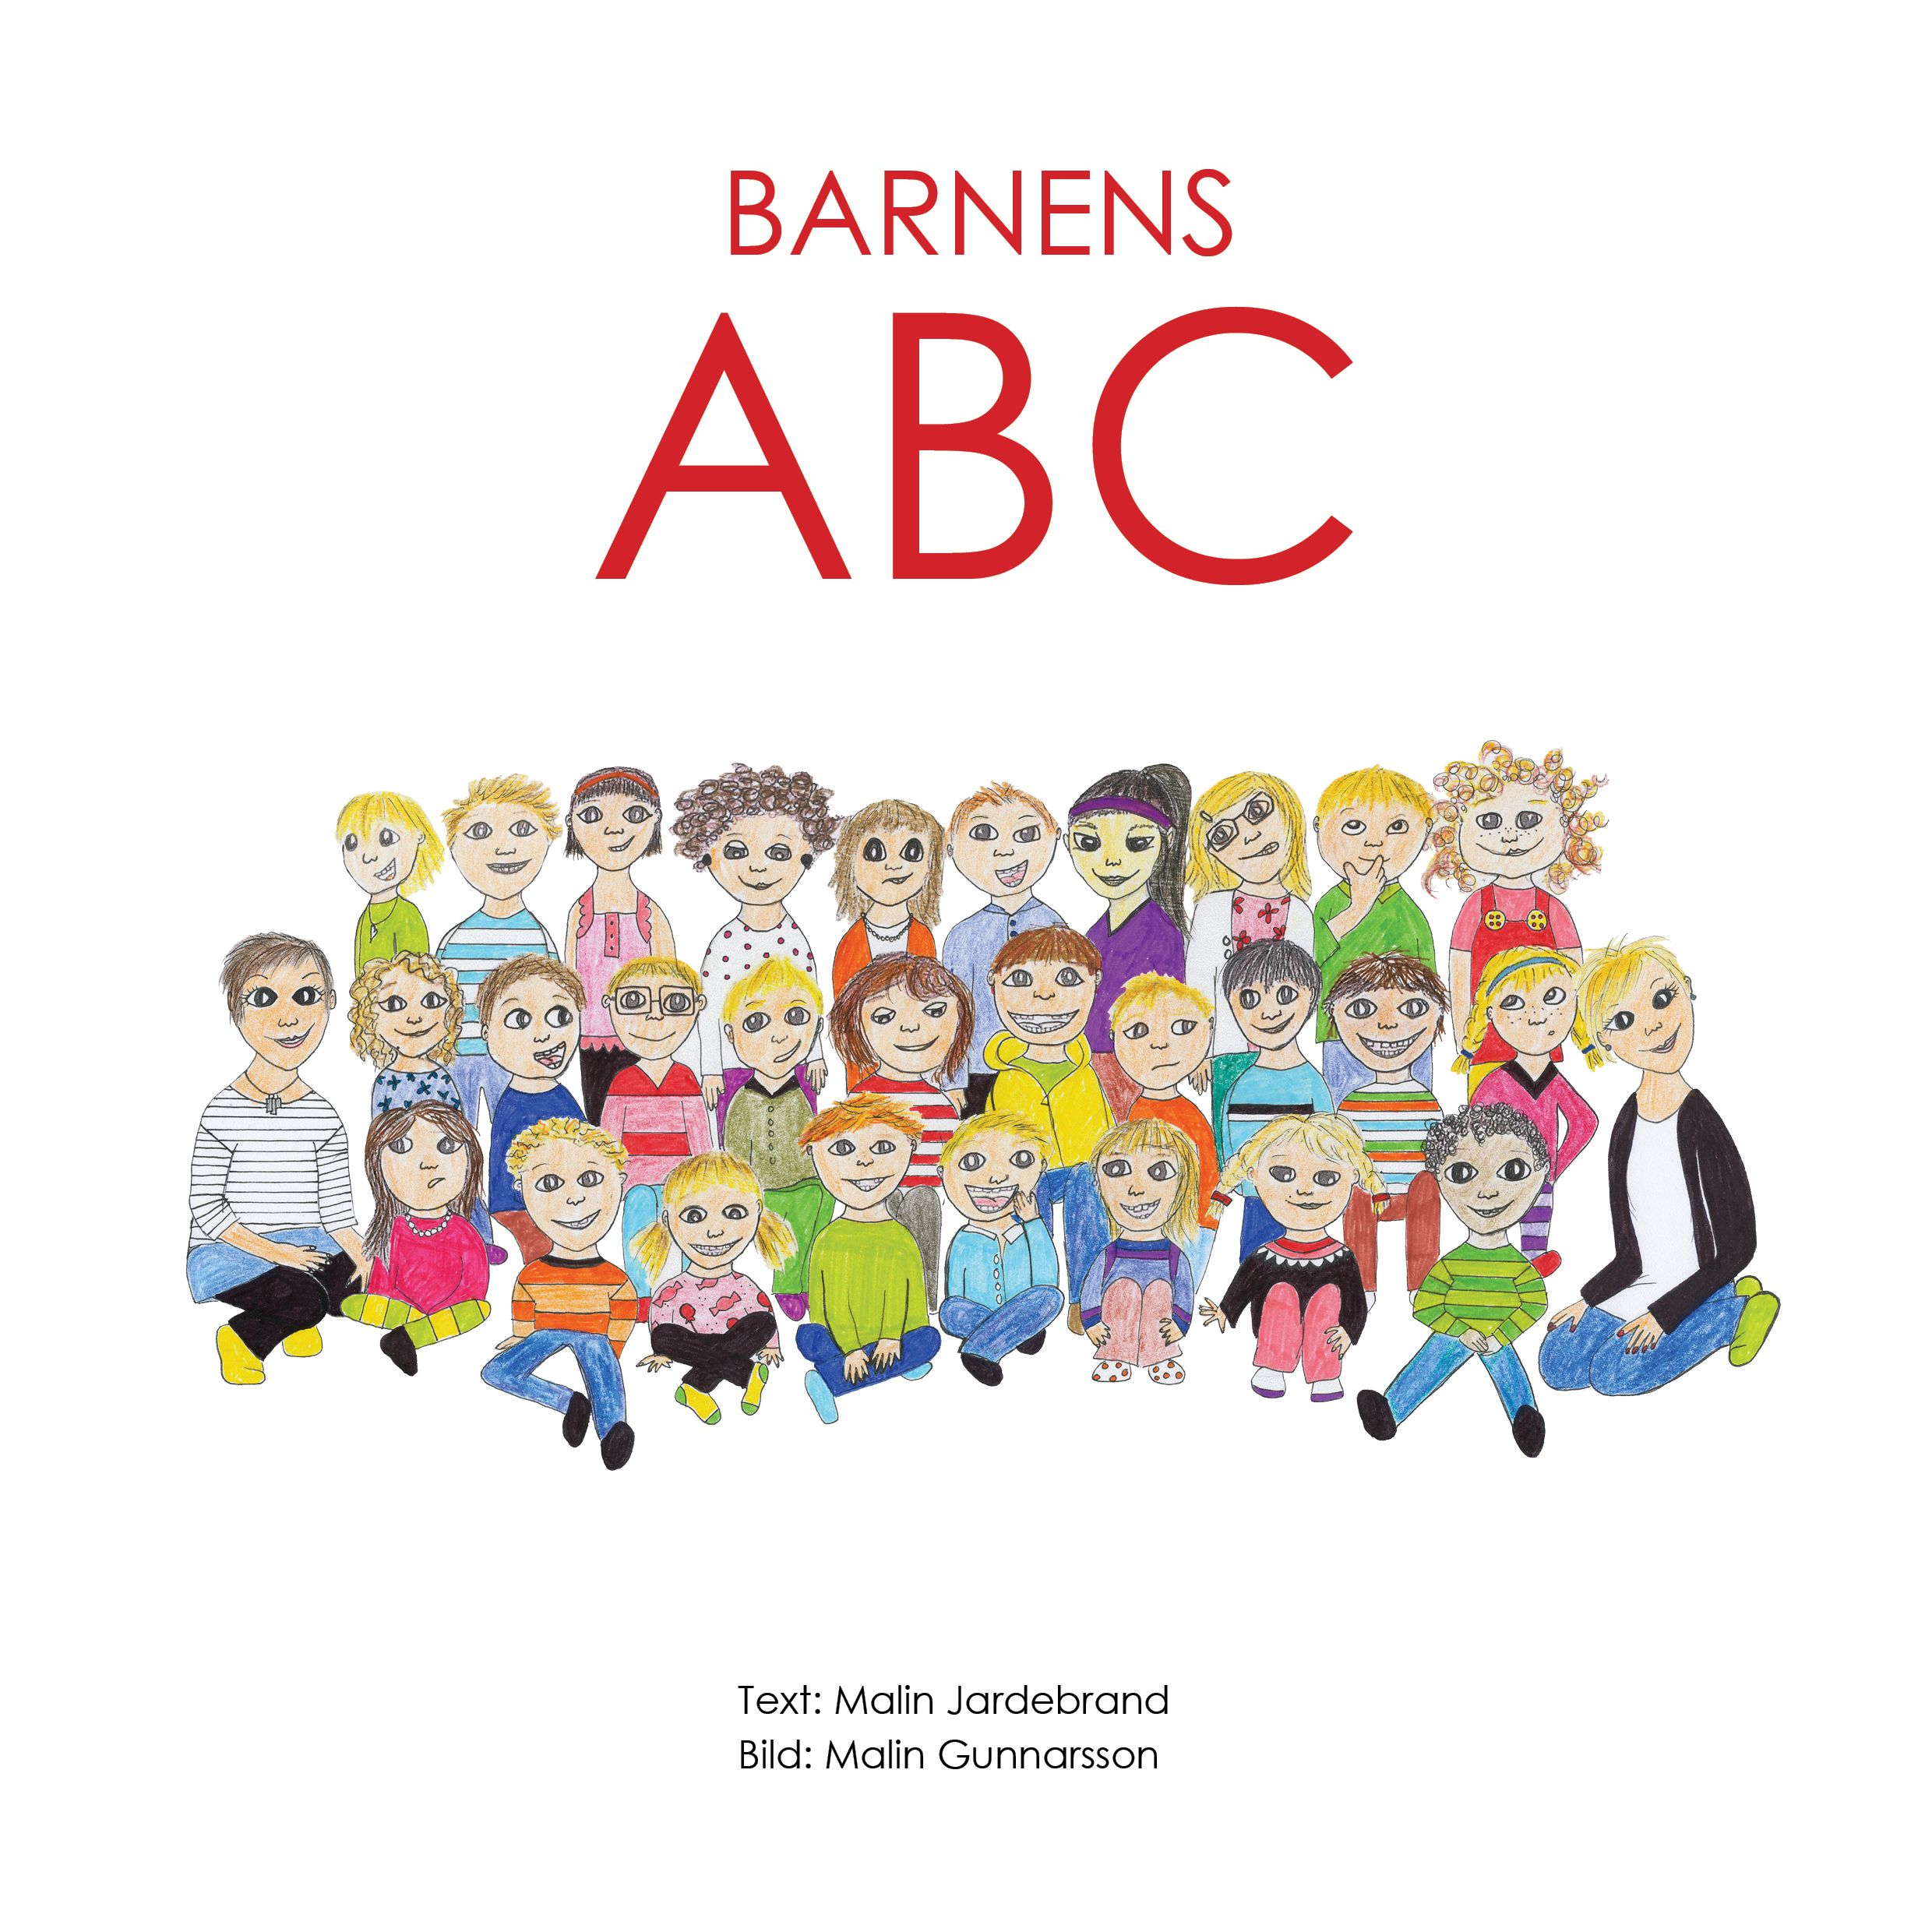 Barnens ABC, eBook by Malin Jardebrand